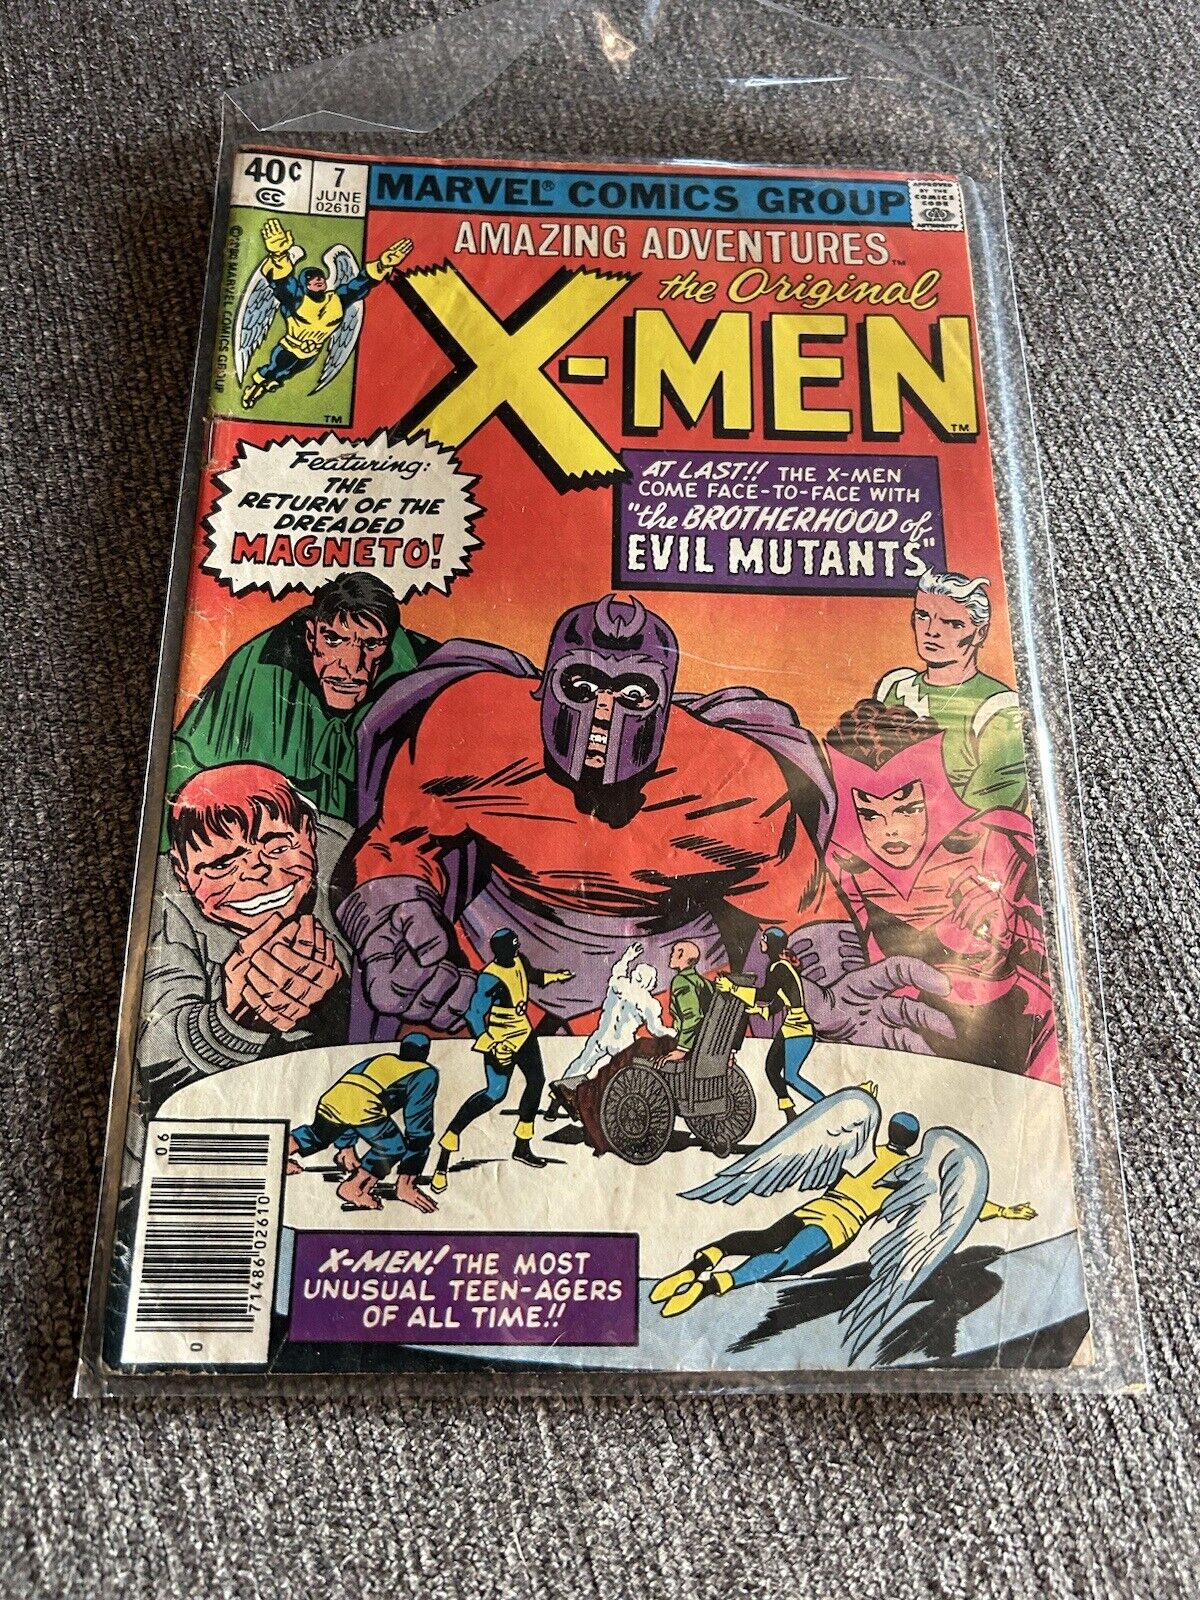 THE ORIGINAL X-MEN #7 JUNE 1980 VOL. 3 MARVEL COMICS GROUP Priced To Move